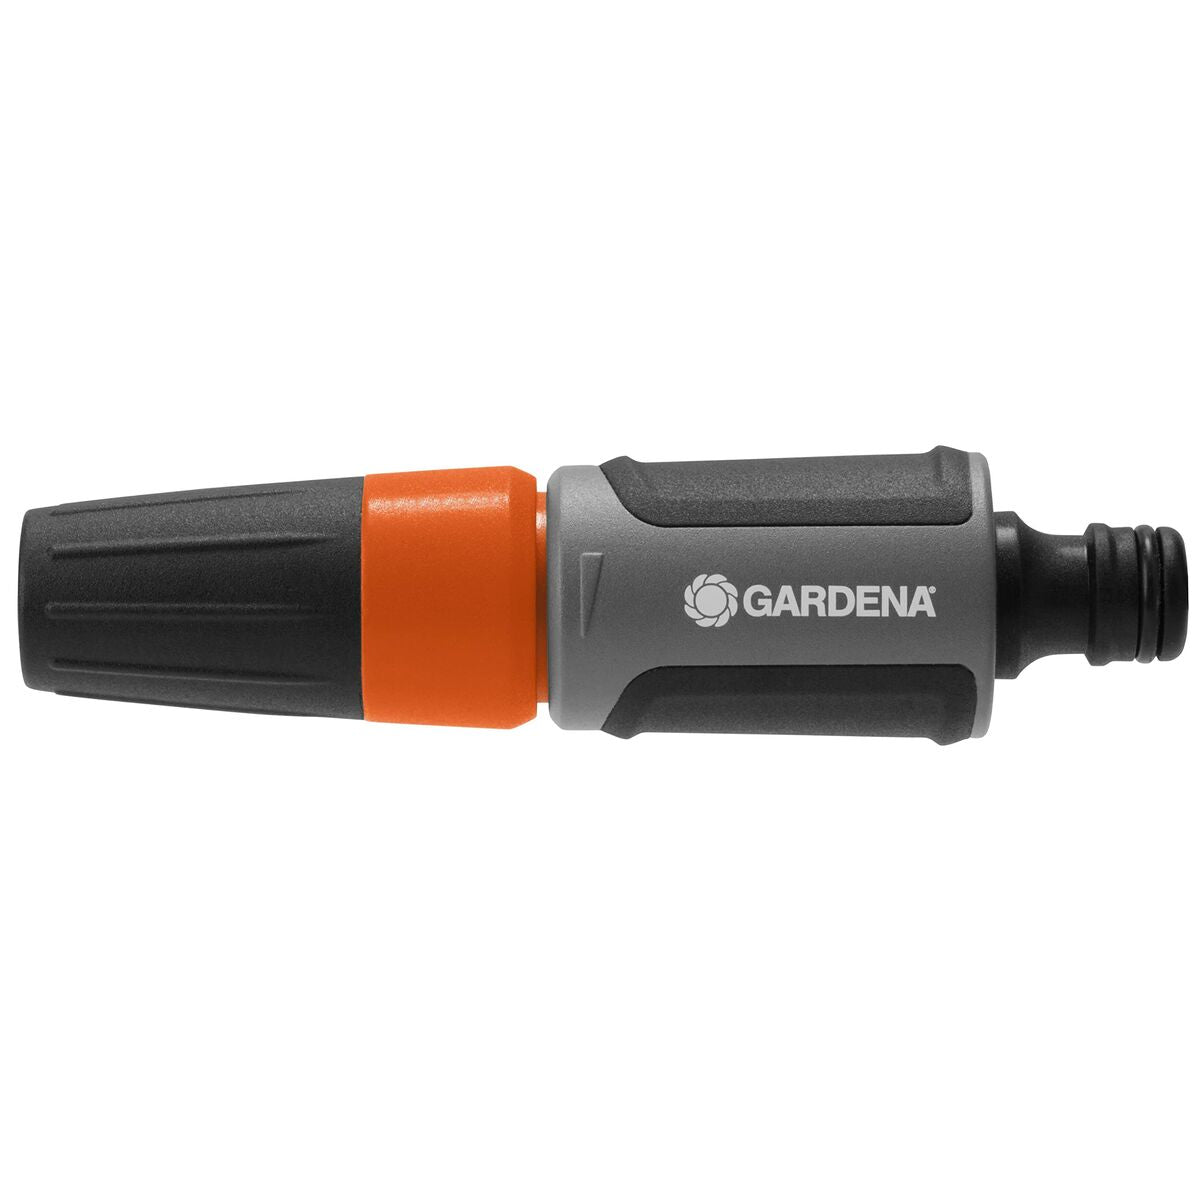 Spray lance Gardena 18300-20 ajustable